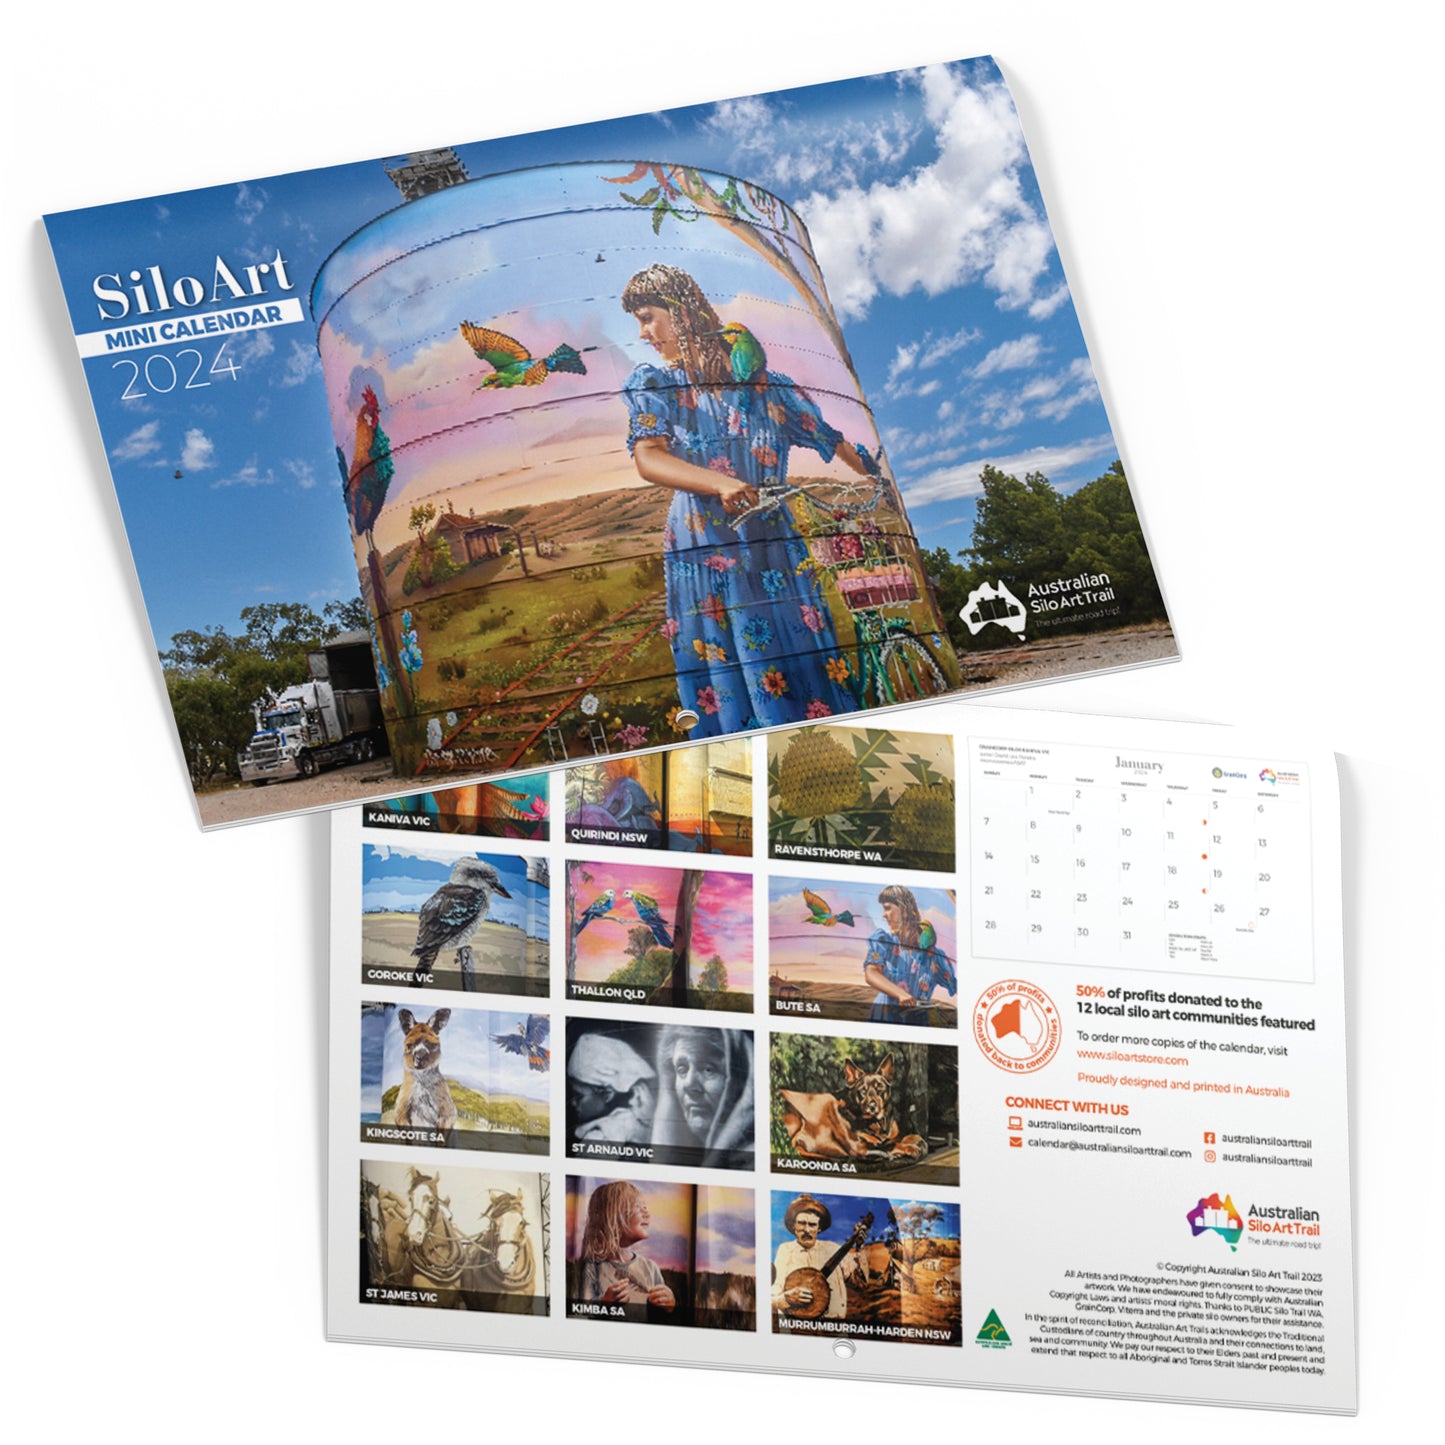 FREE 2024 Standard and Mini Calendar with The Australian Silo Art Guide